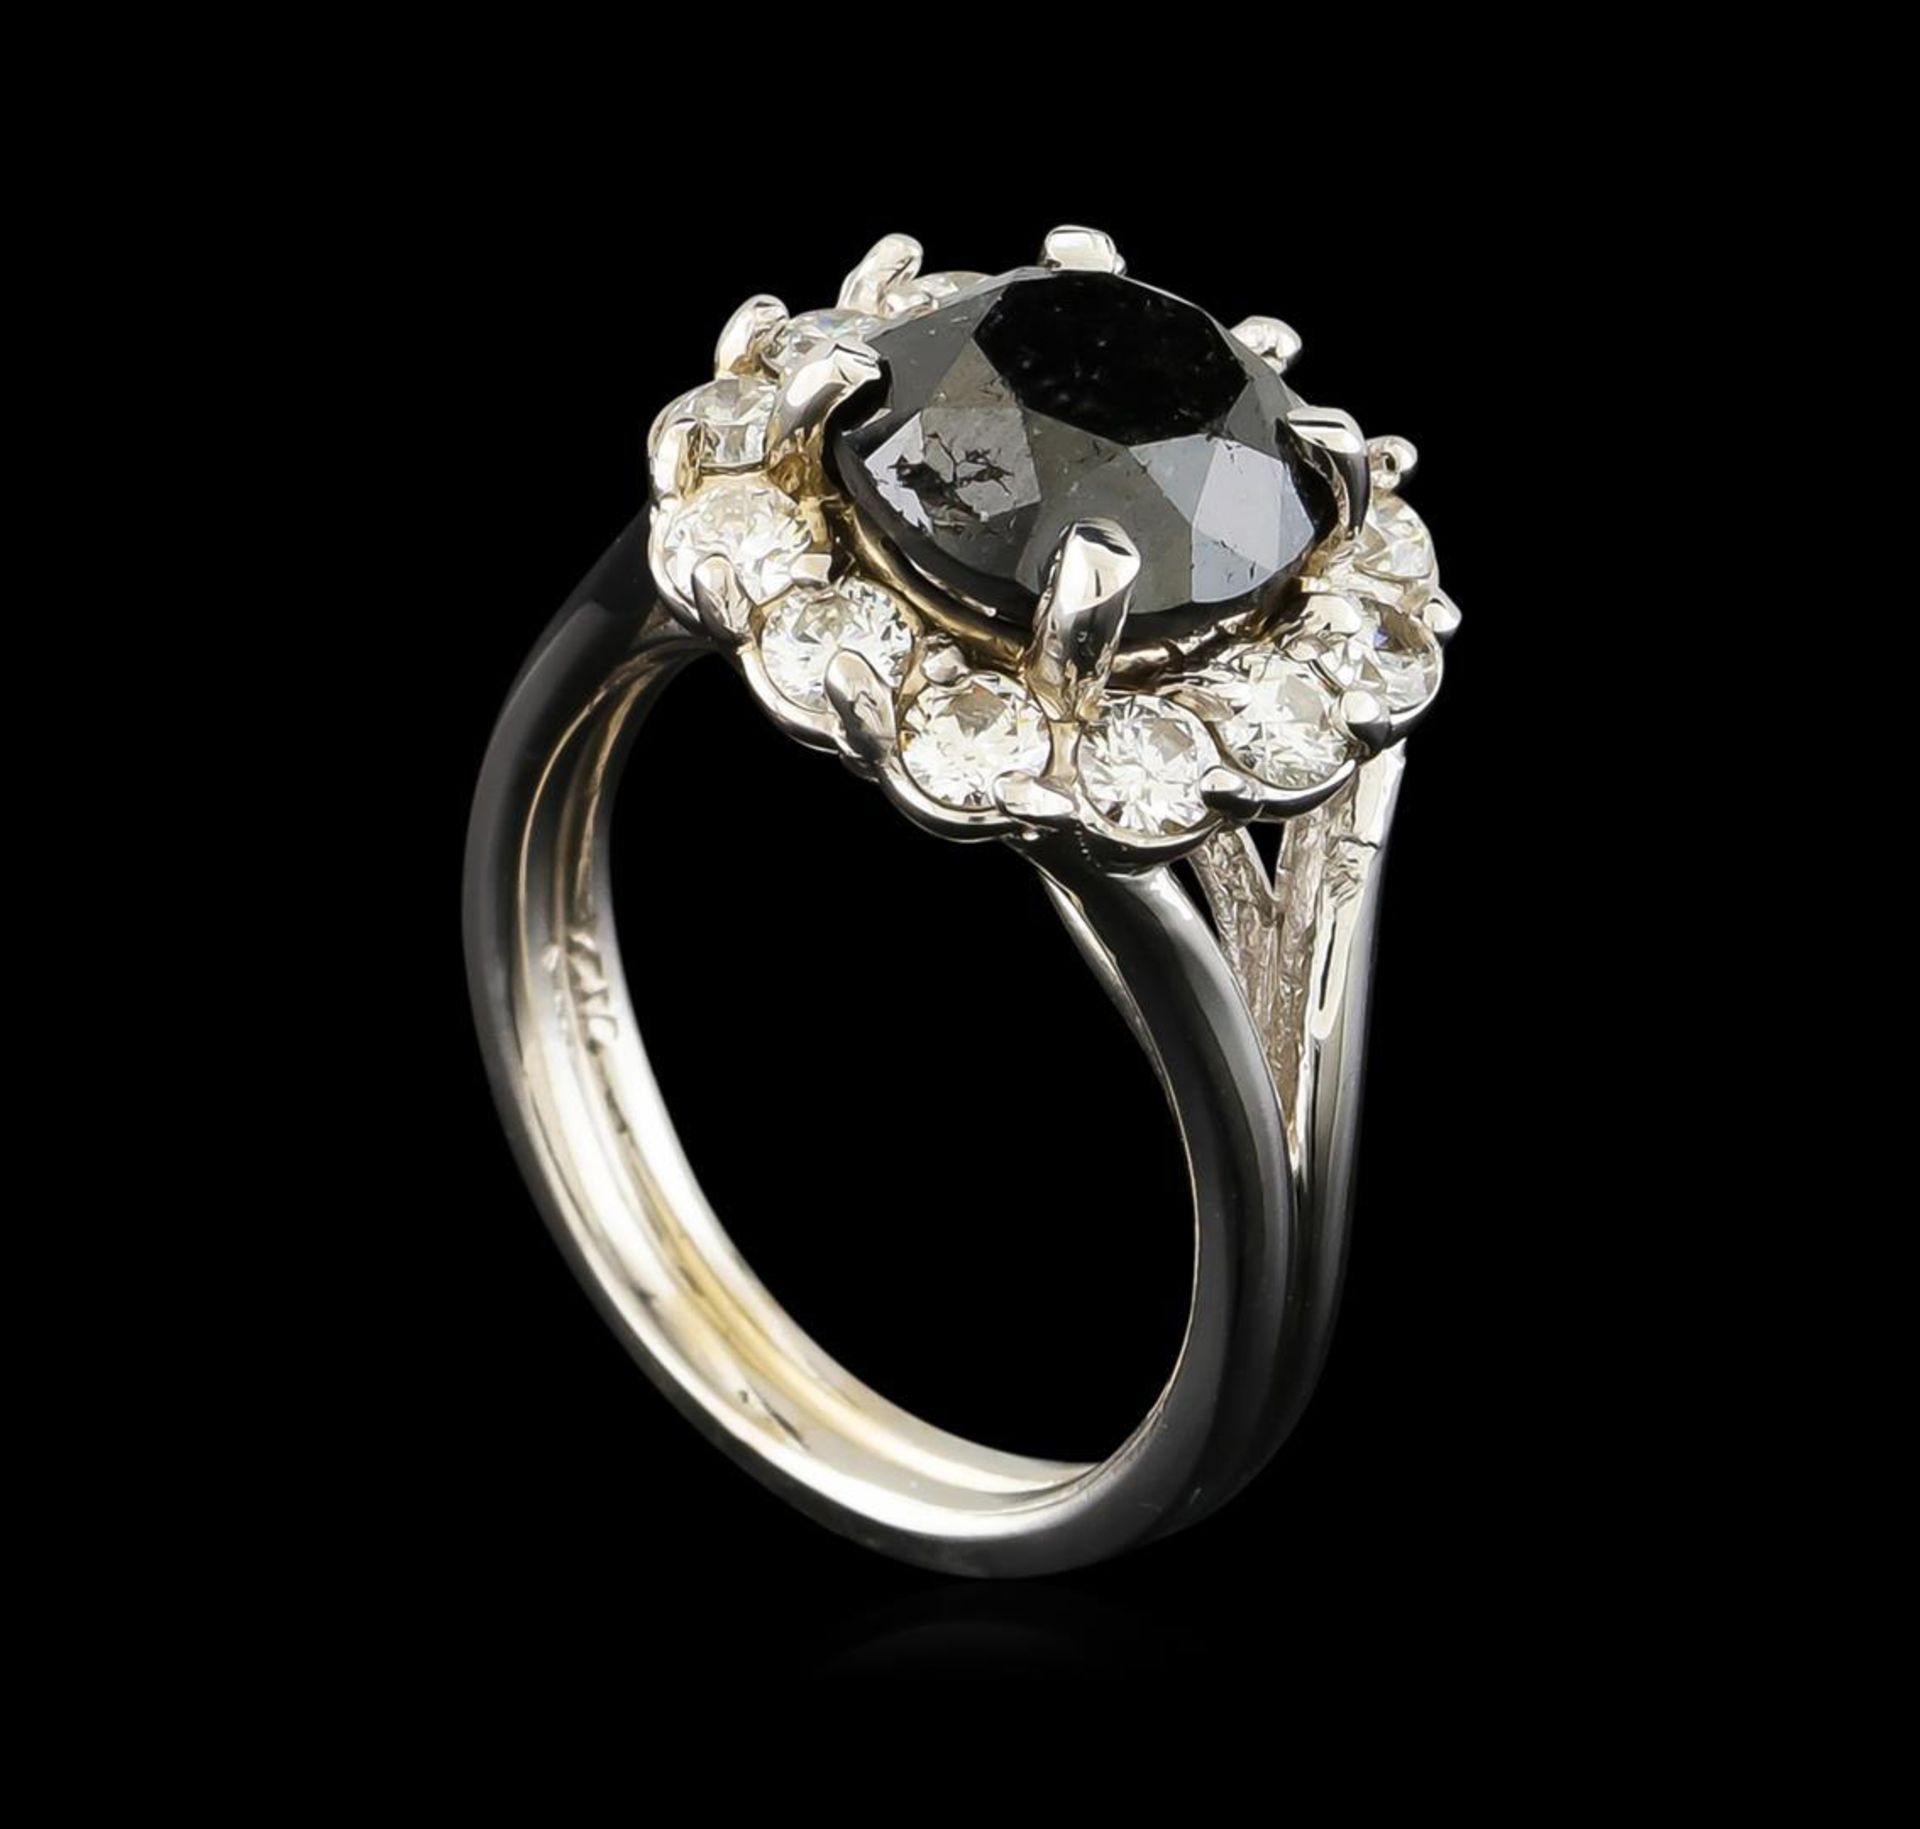 4.42 ctw Black Diamond Ring - 14KT White Gold - Image 4 of 5